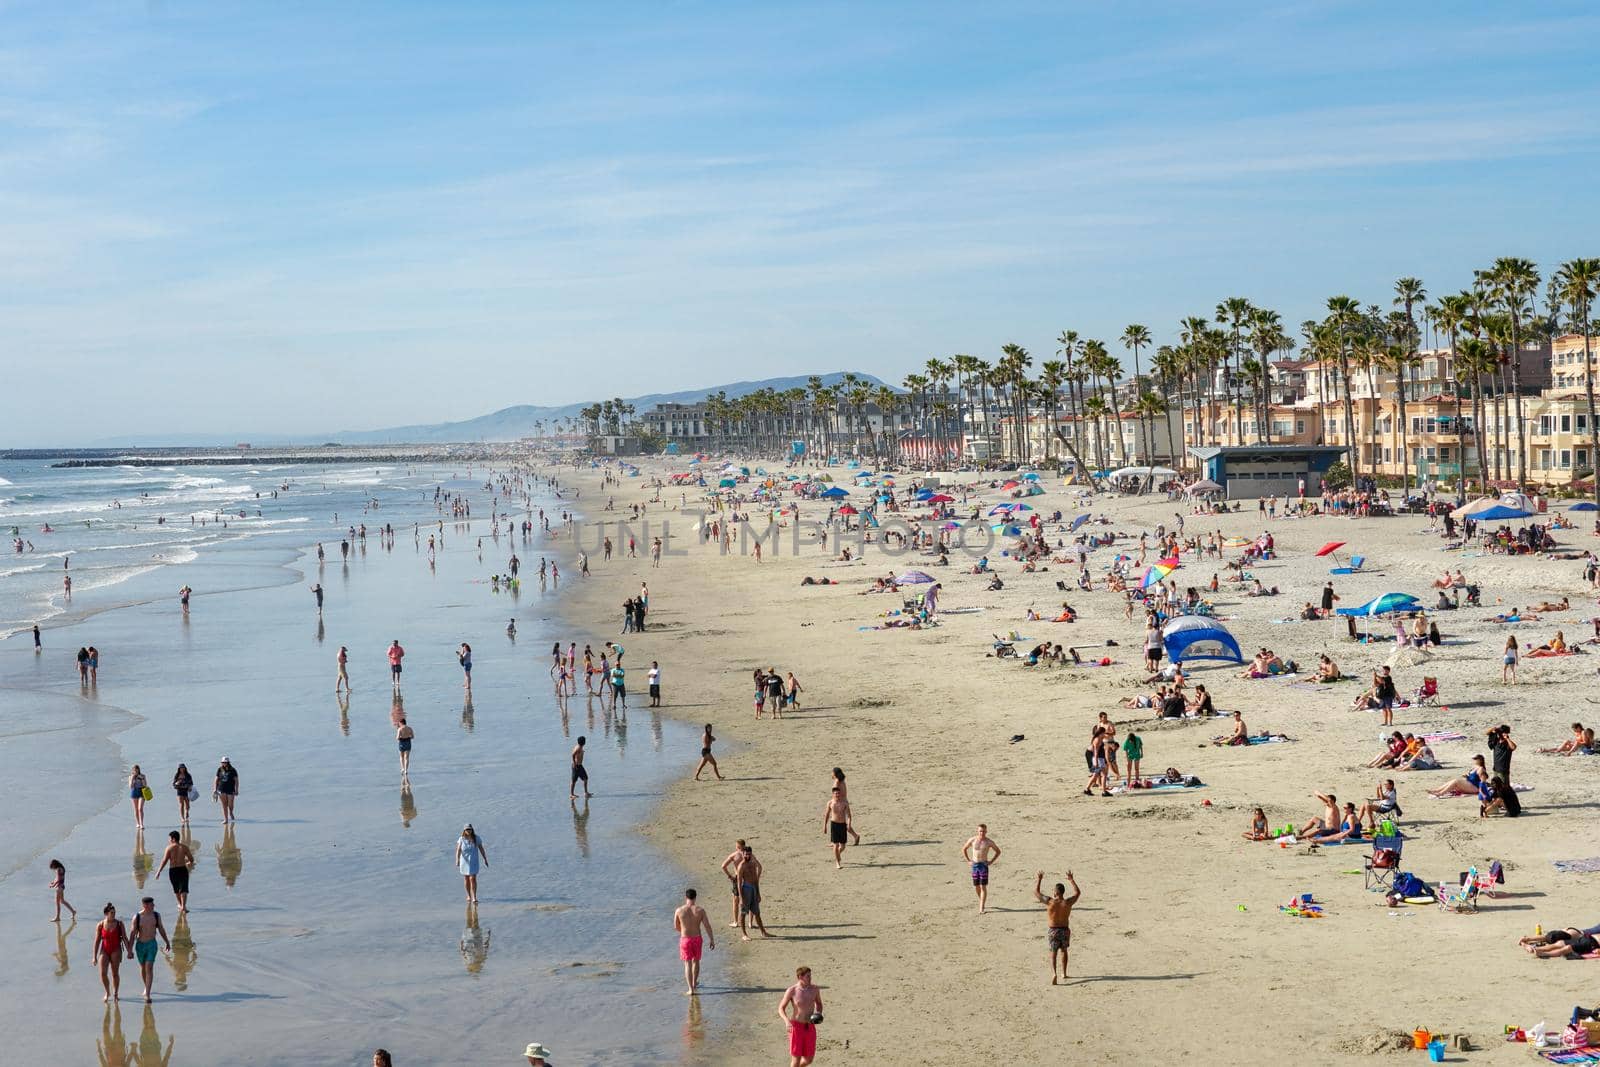 People on the beach enjoying beautiful summer day at Oceanside beach in San Diego, California. 